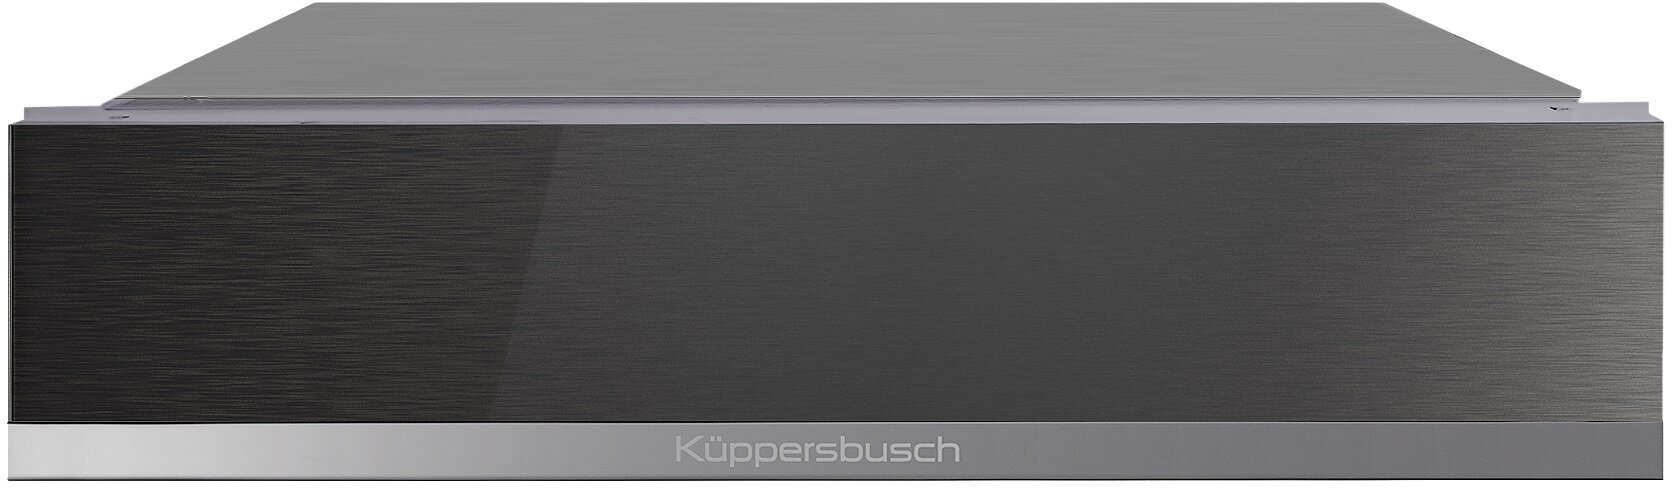 Подогреватель посуды Kuppersbusch CSW 6800.0 G3 Silver Chrome - фотография № 2